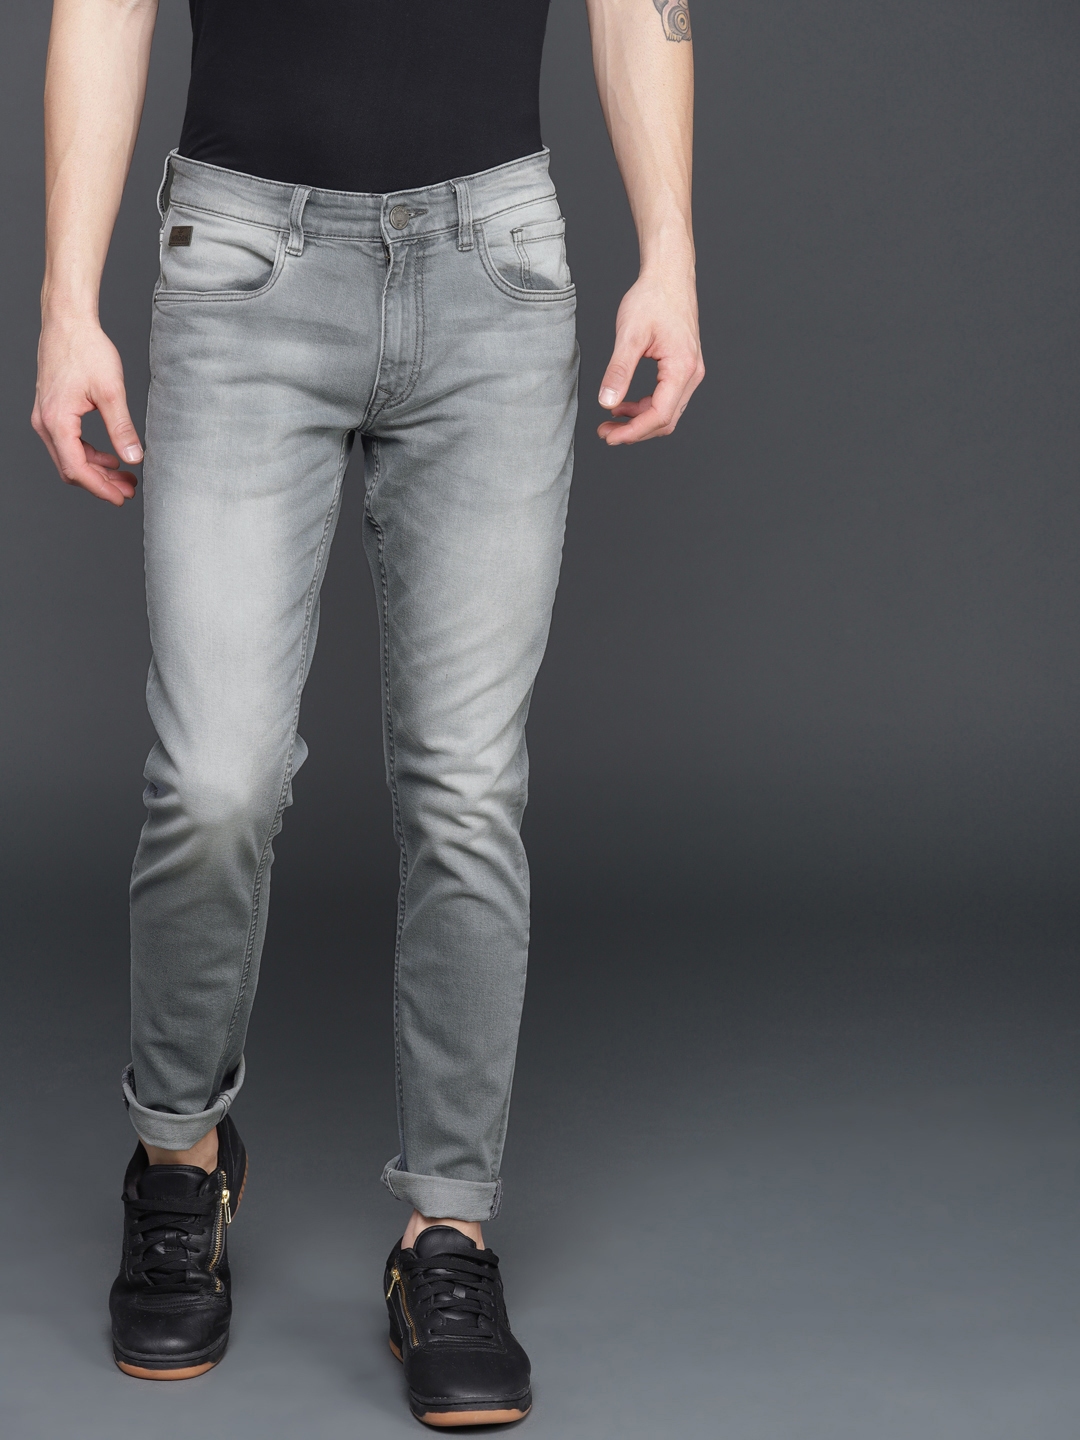 wrogn grey jeans